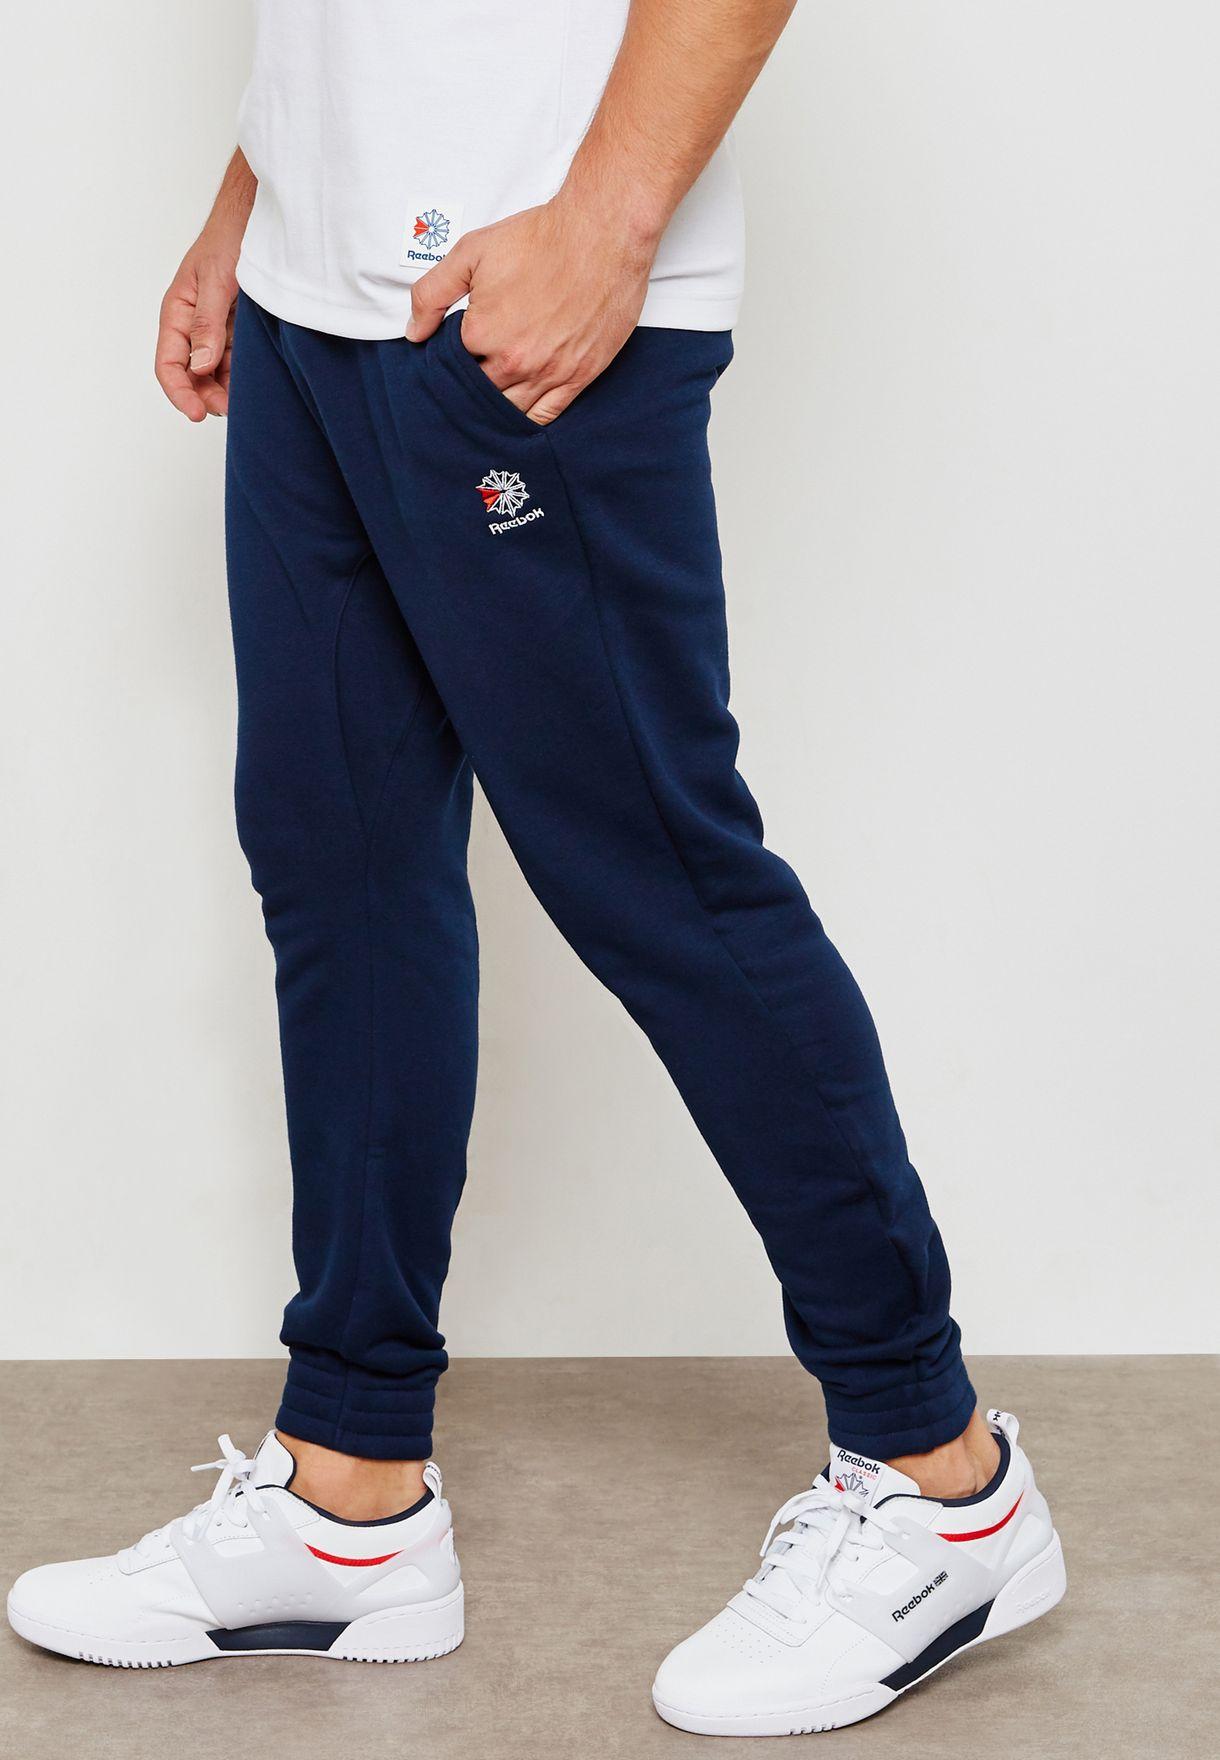 Buy Reebok Womens Classics Franchise Fleece Pants, 59% OFF